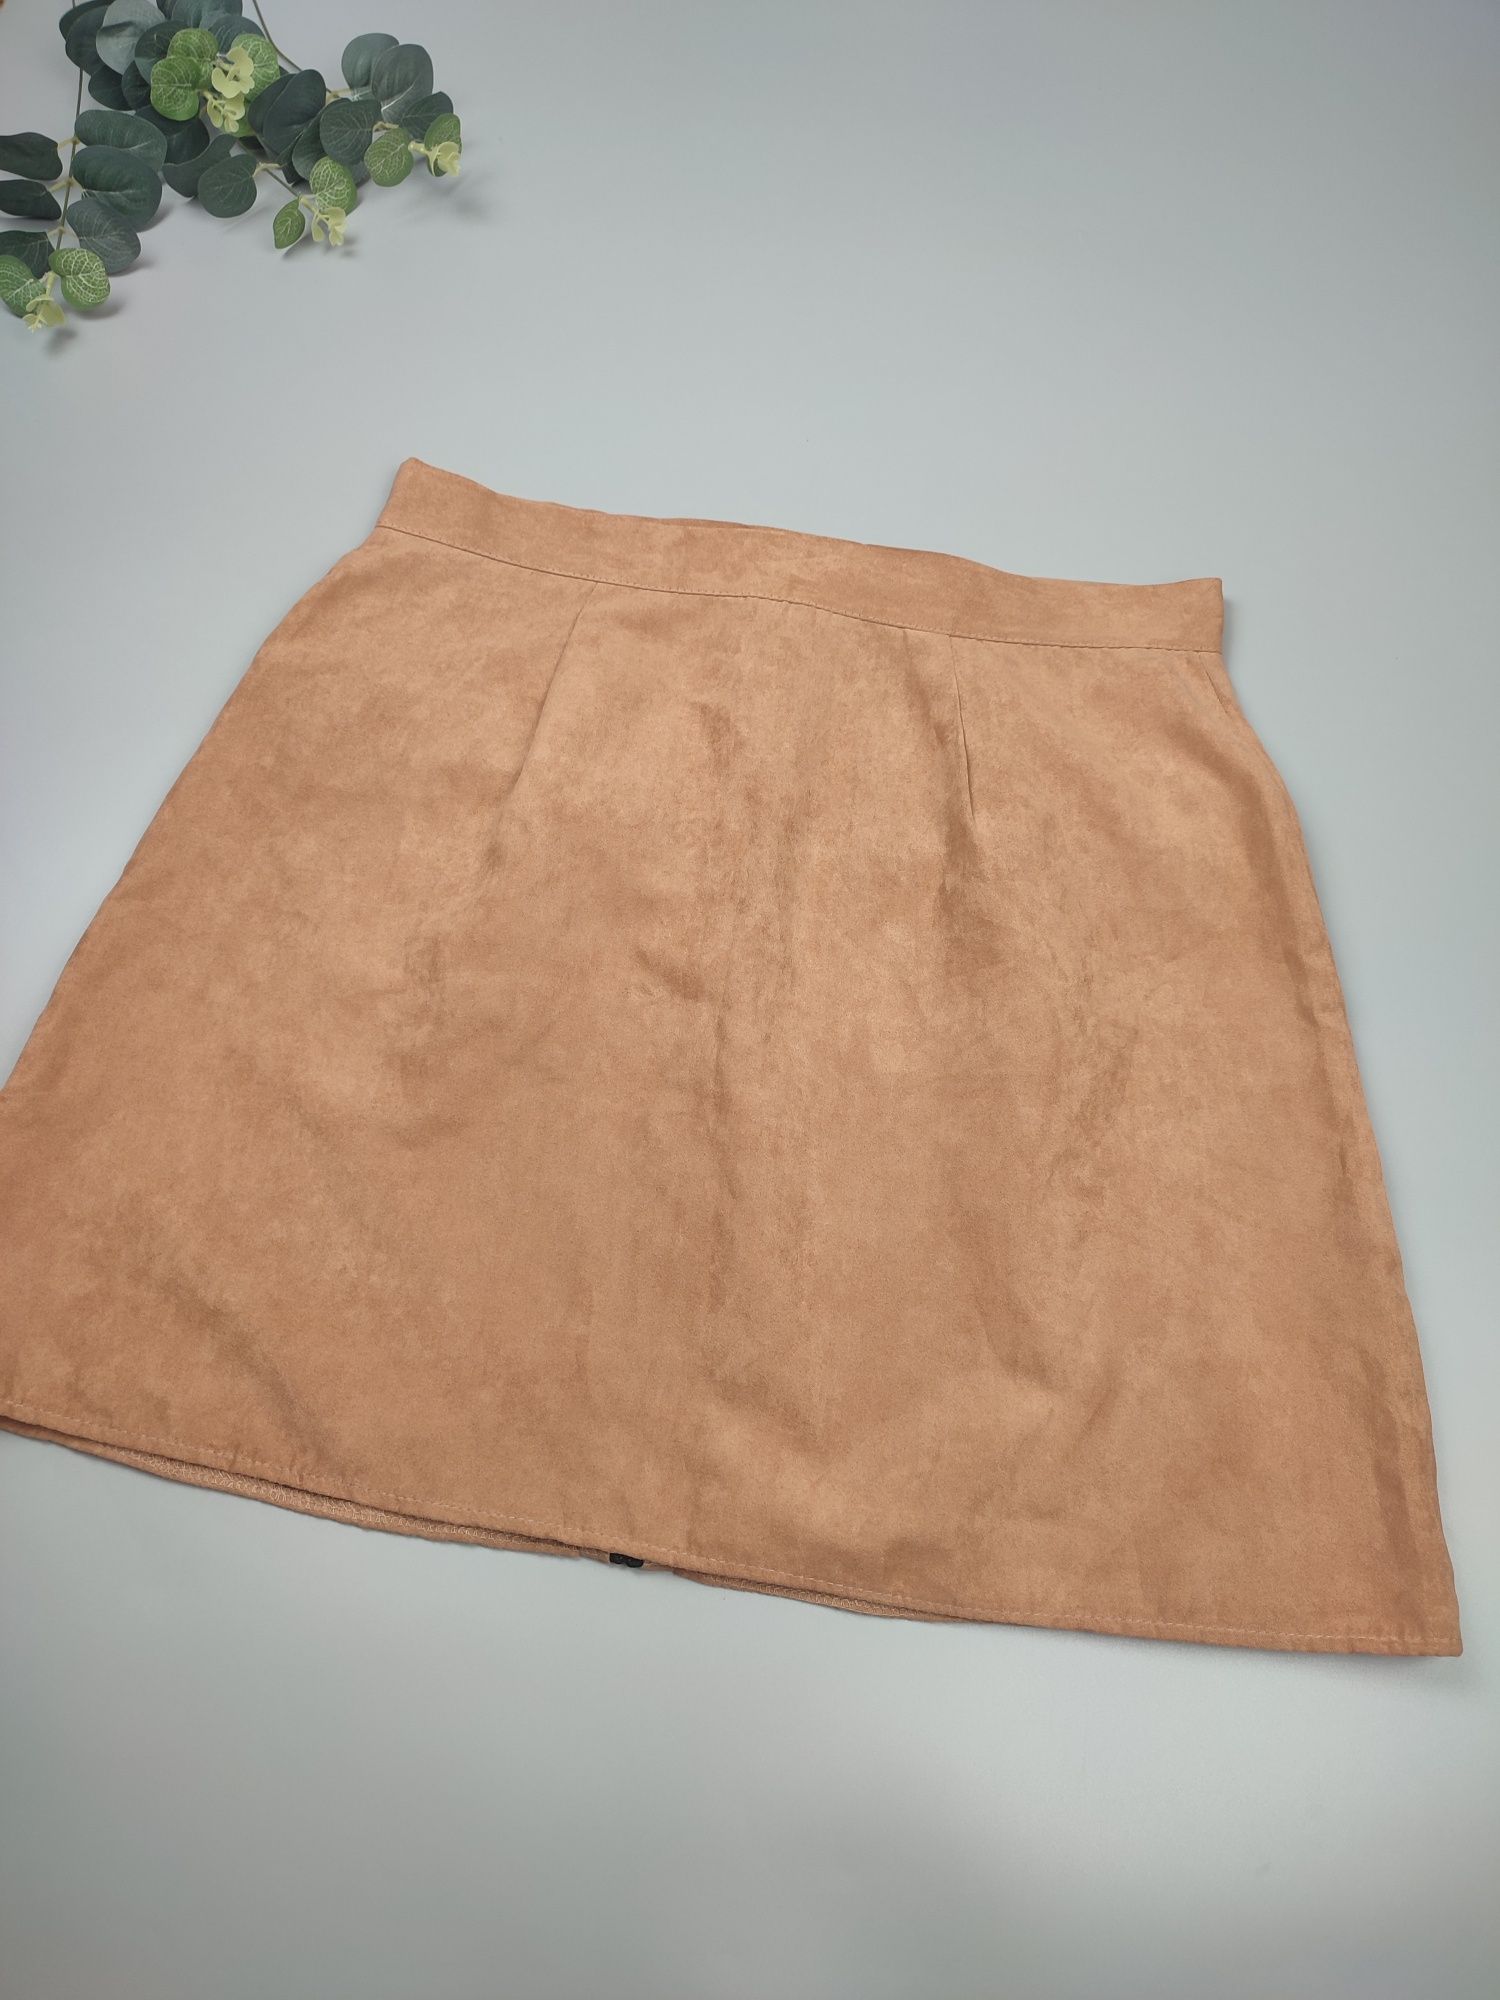 Замшевая юбка М/L, коричневая мини юбка, спідниця замш,